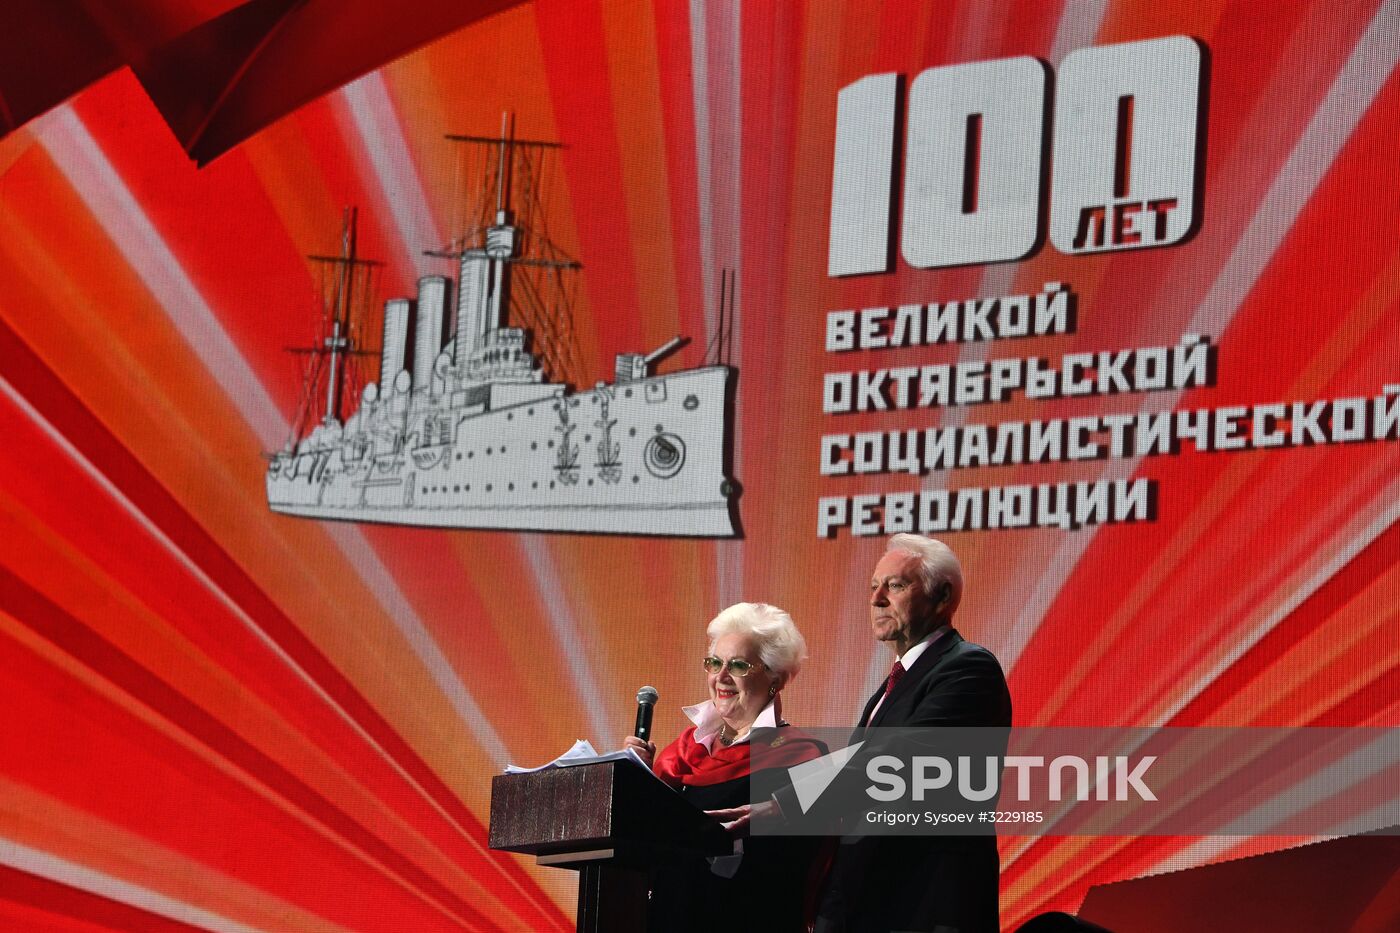 Gala to mark 100th anniversary of Great October Socialist Revolution